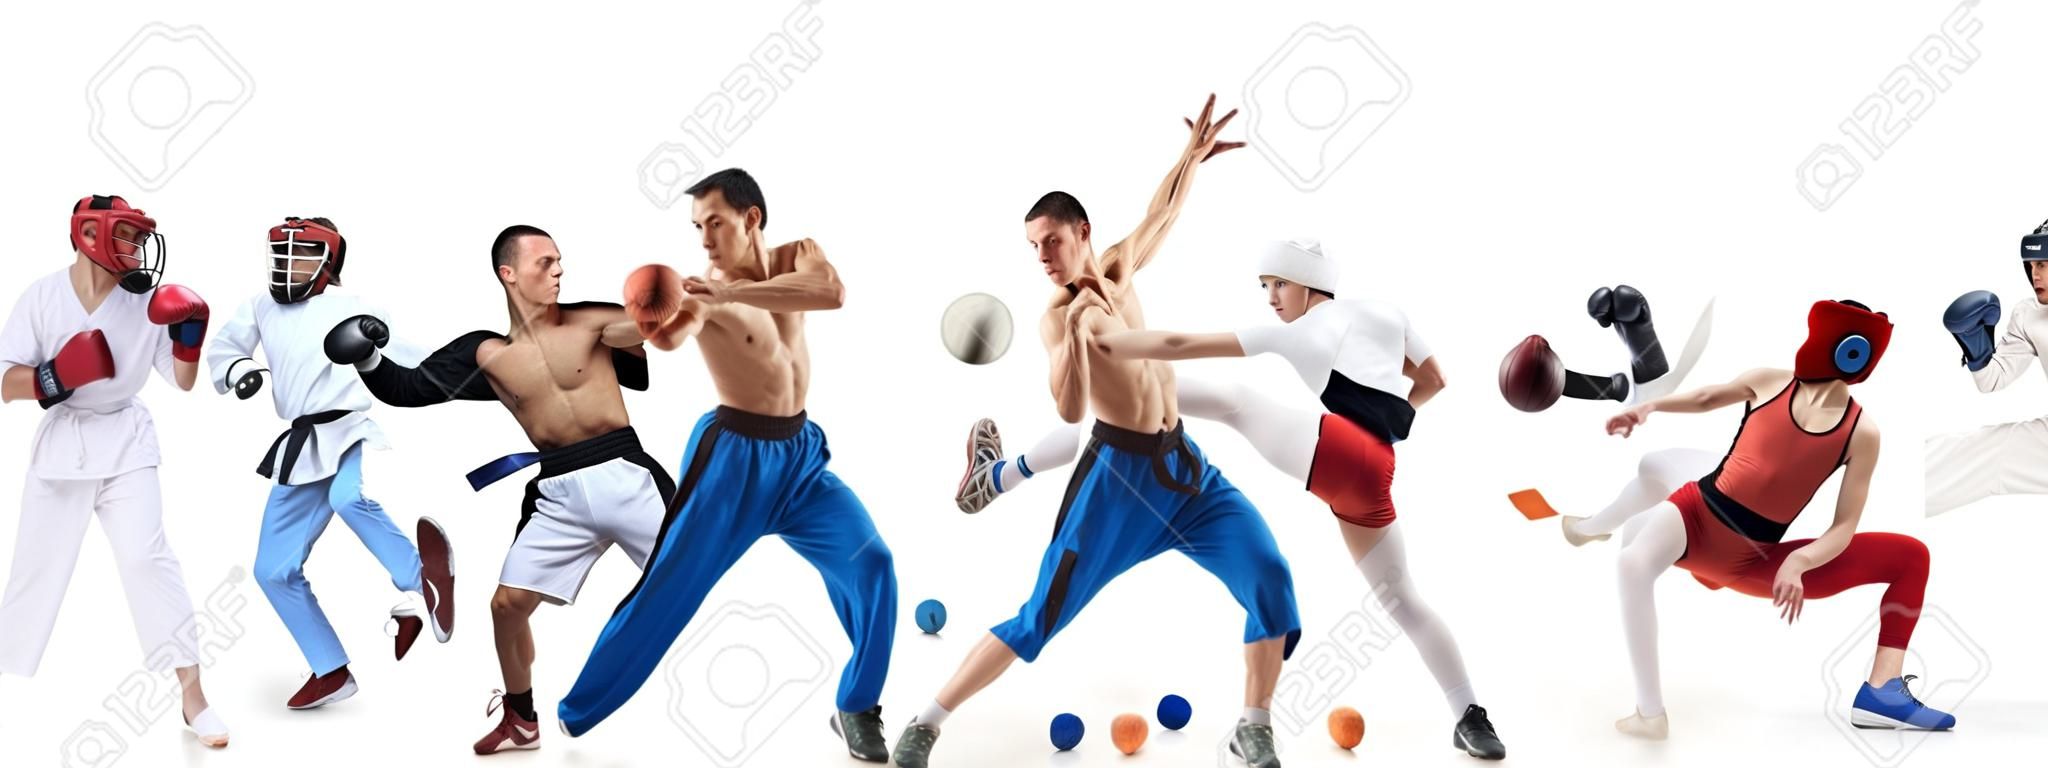 Collage sportivi su boxe, calcio, football americano, pallacanestro, hockey su ghiaccio, scherma, jogging, taekwondo, tennis